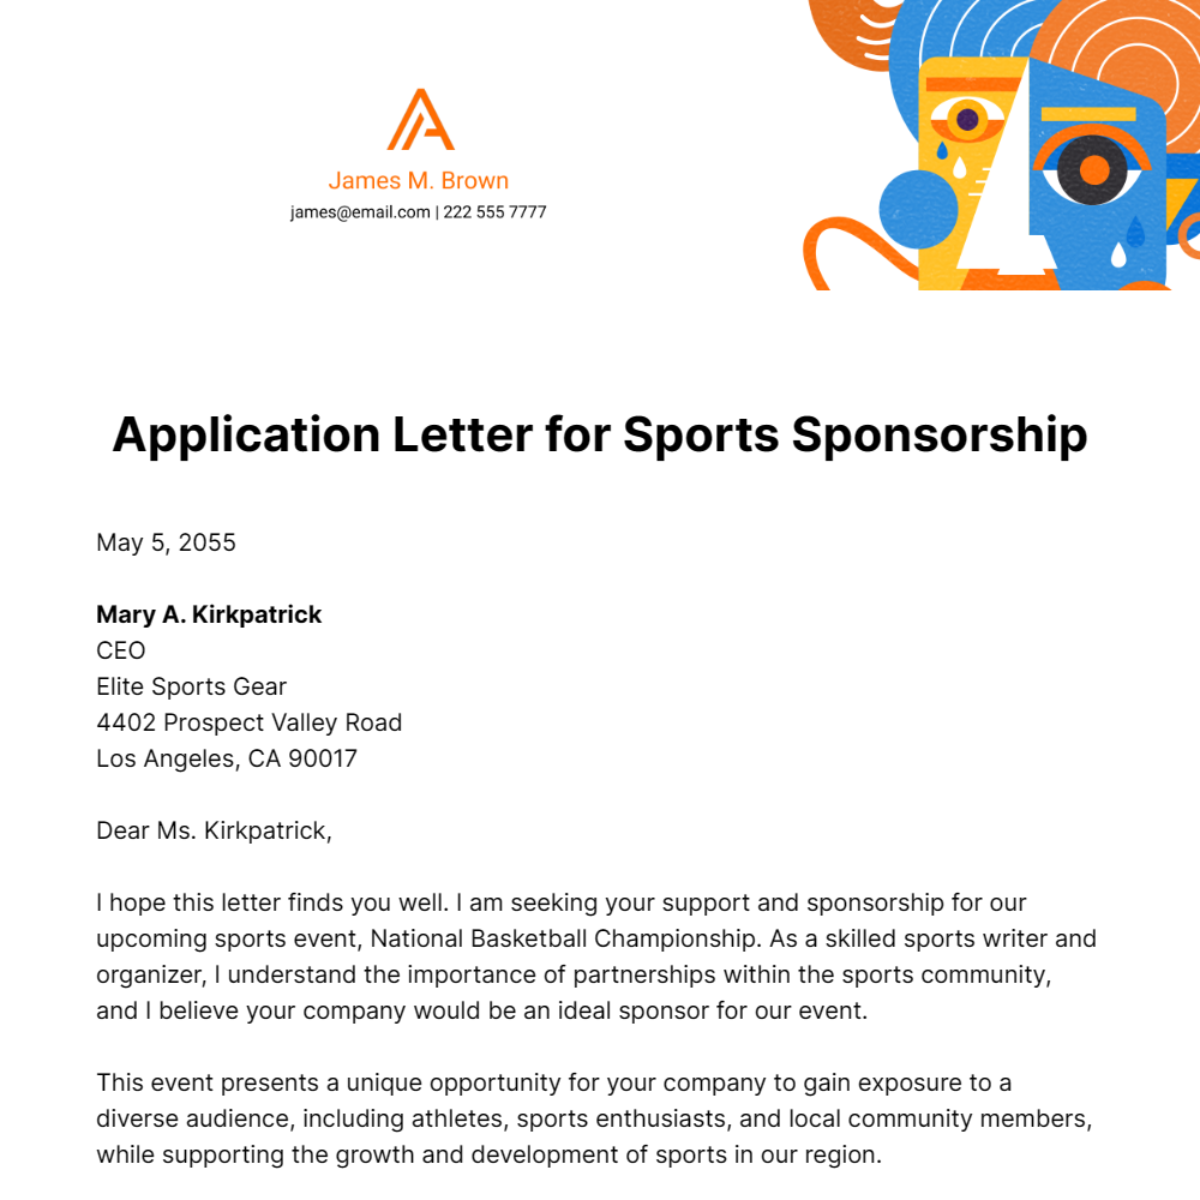 Application Letter for Sports Sponsorship   Template